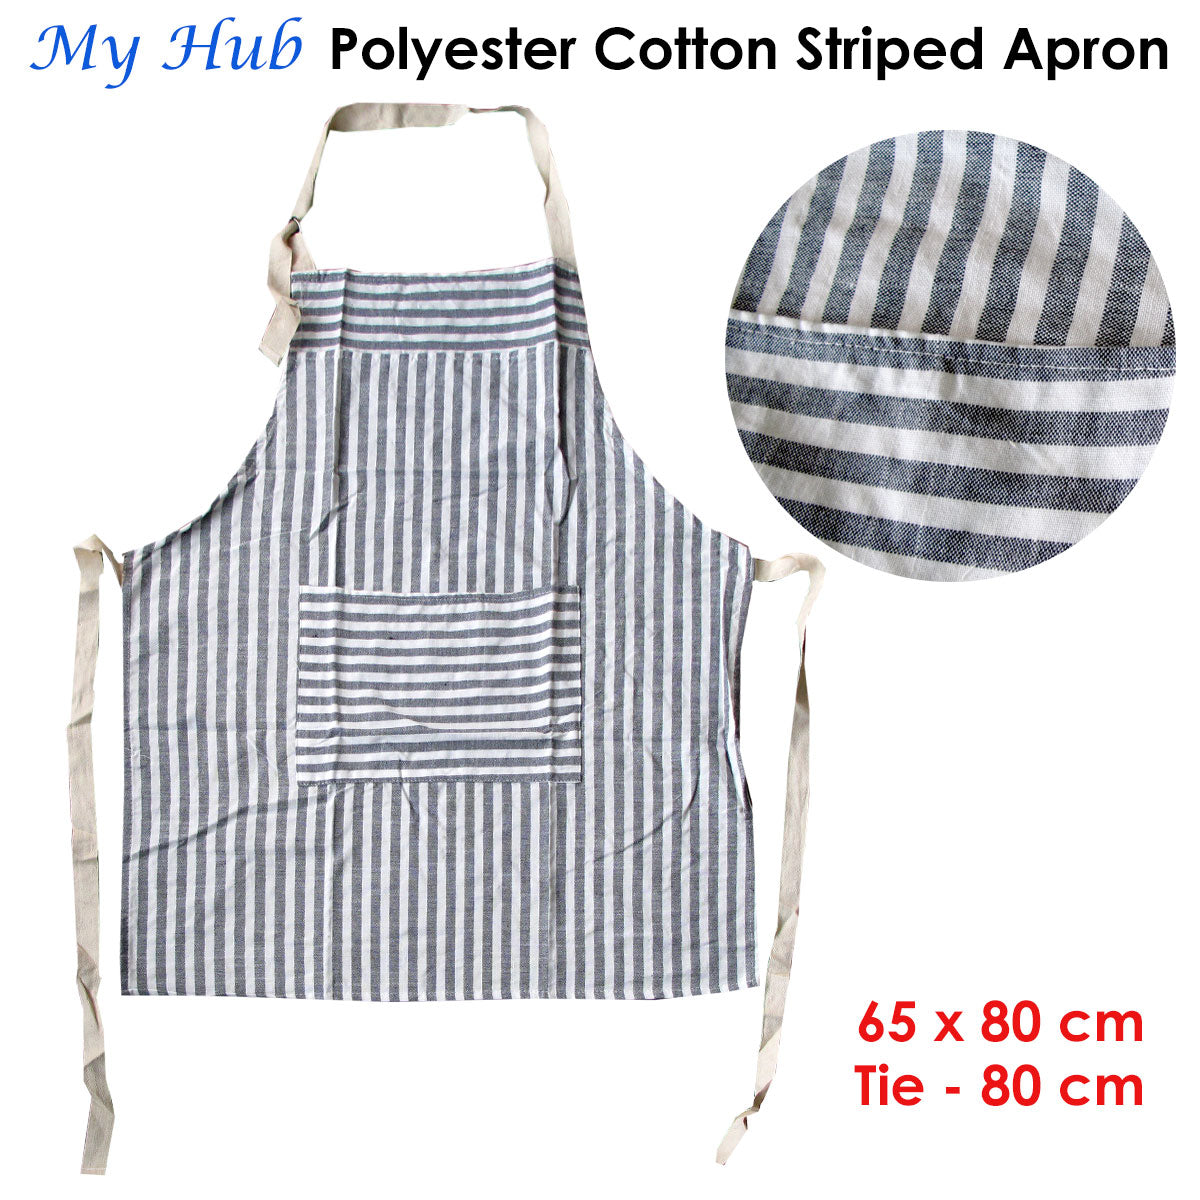 My Hub Polyester Cotton Striped Apron - 0